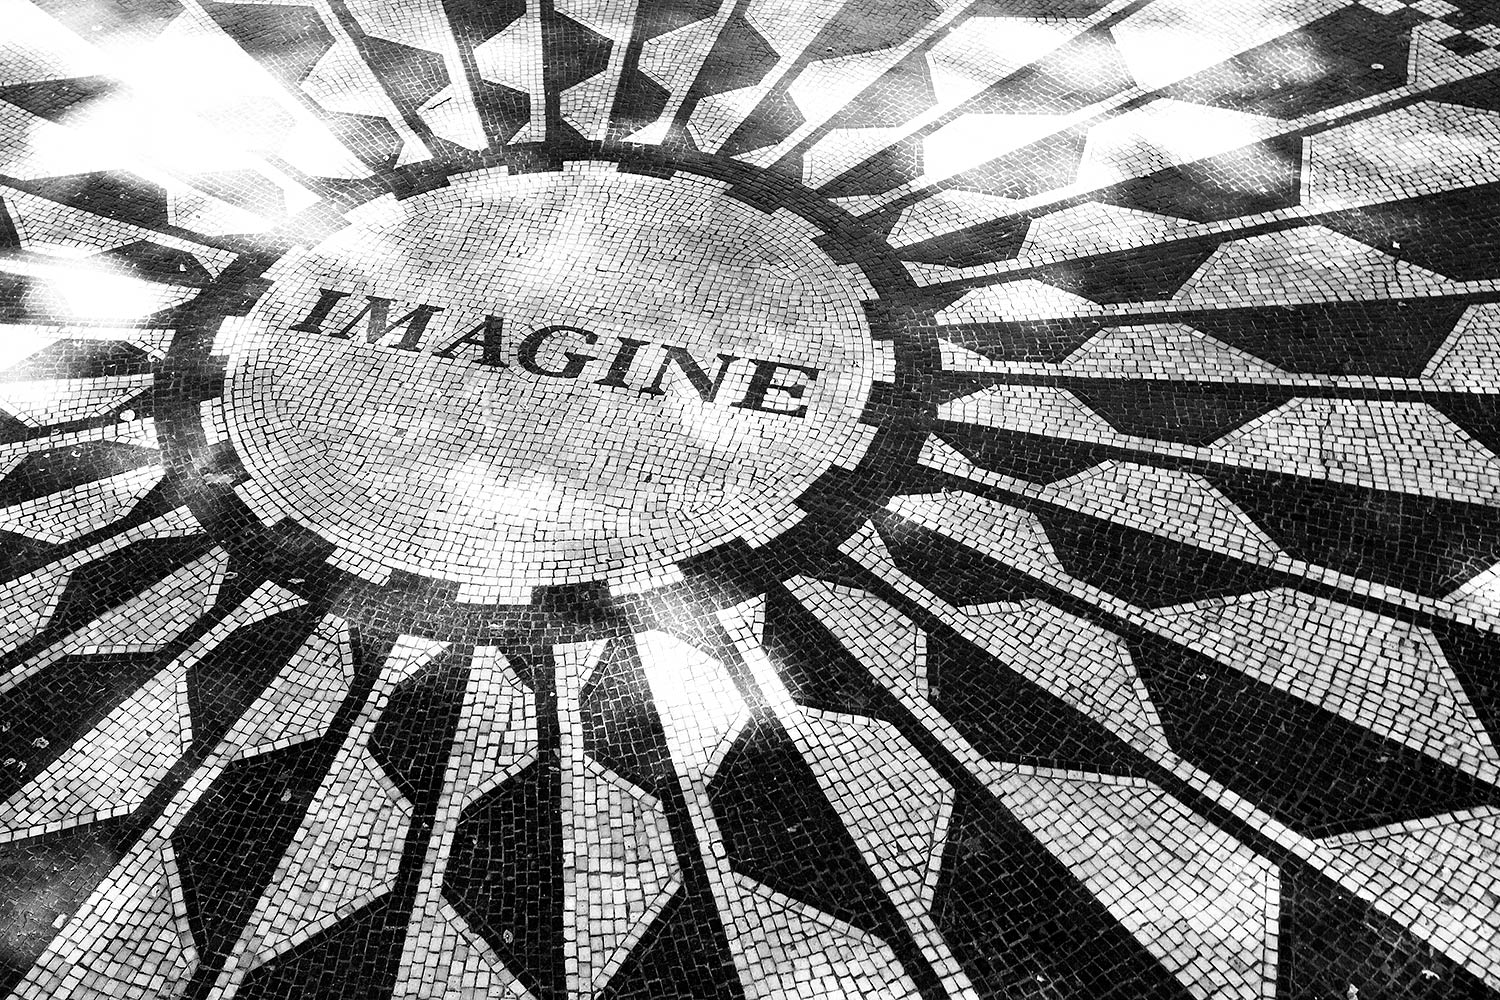 Imagine memorial in Central Park New York